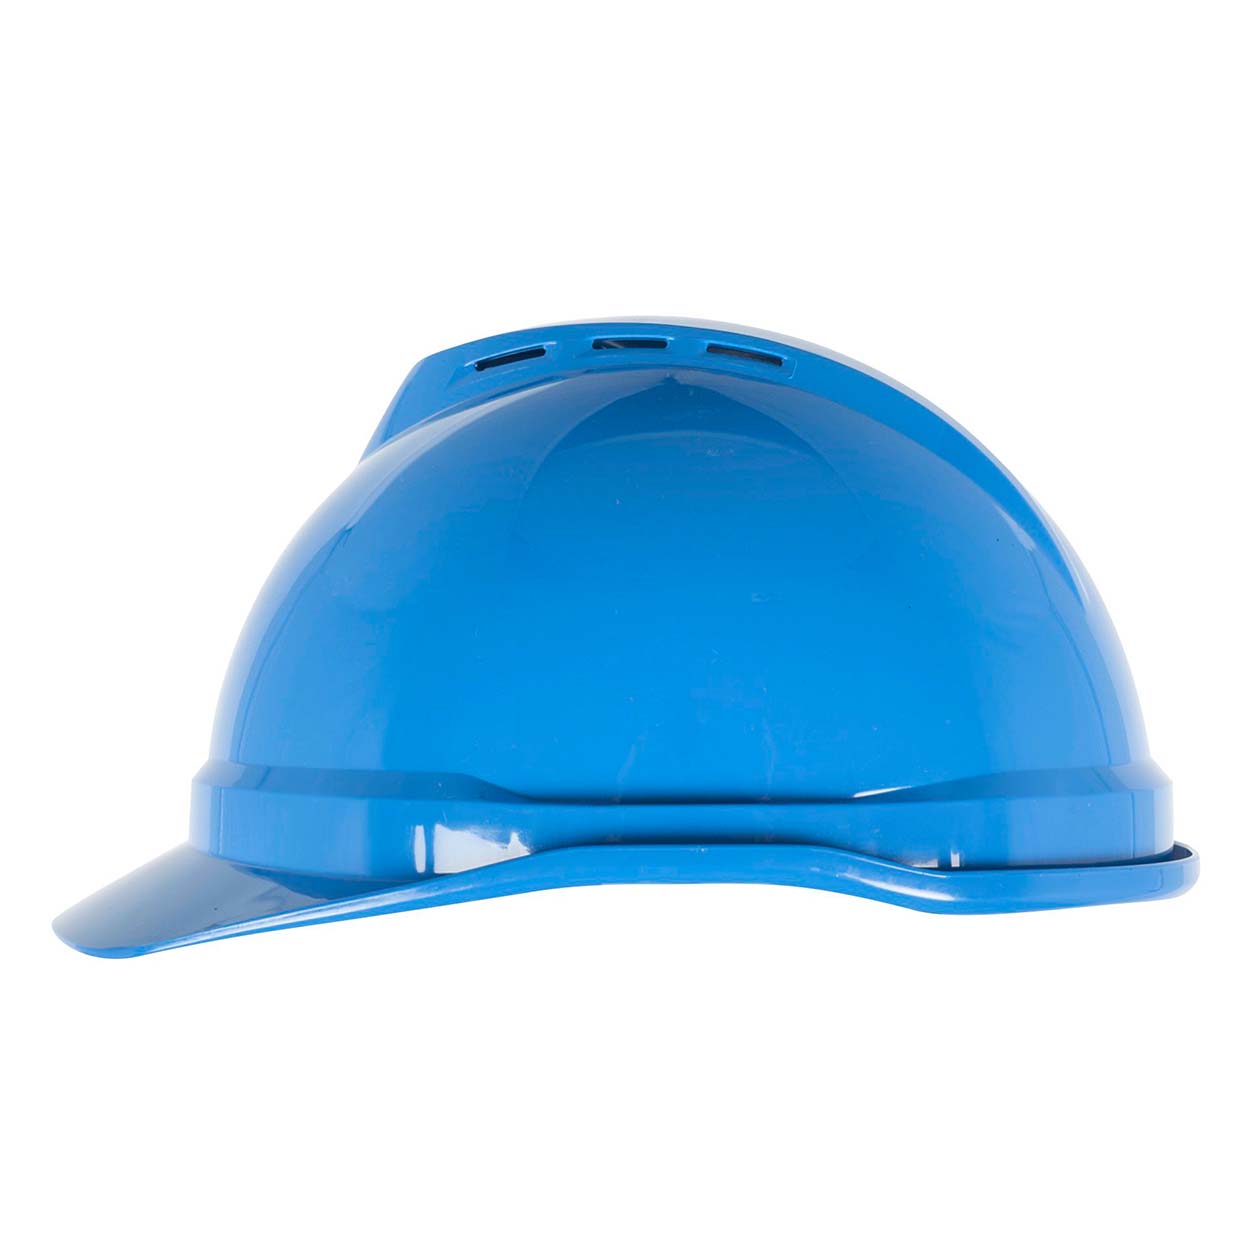 Blue MSA Hard Hat V-Gard 500 Cap 4-Point Fas-Trac III Ratchet Suspension Hardhats